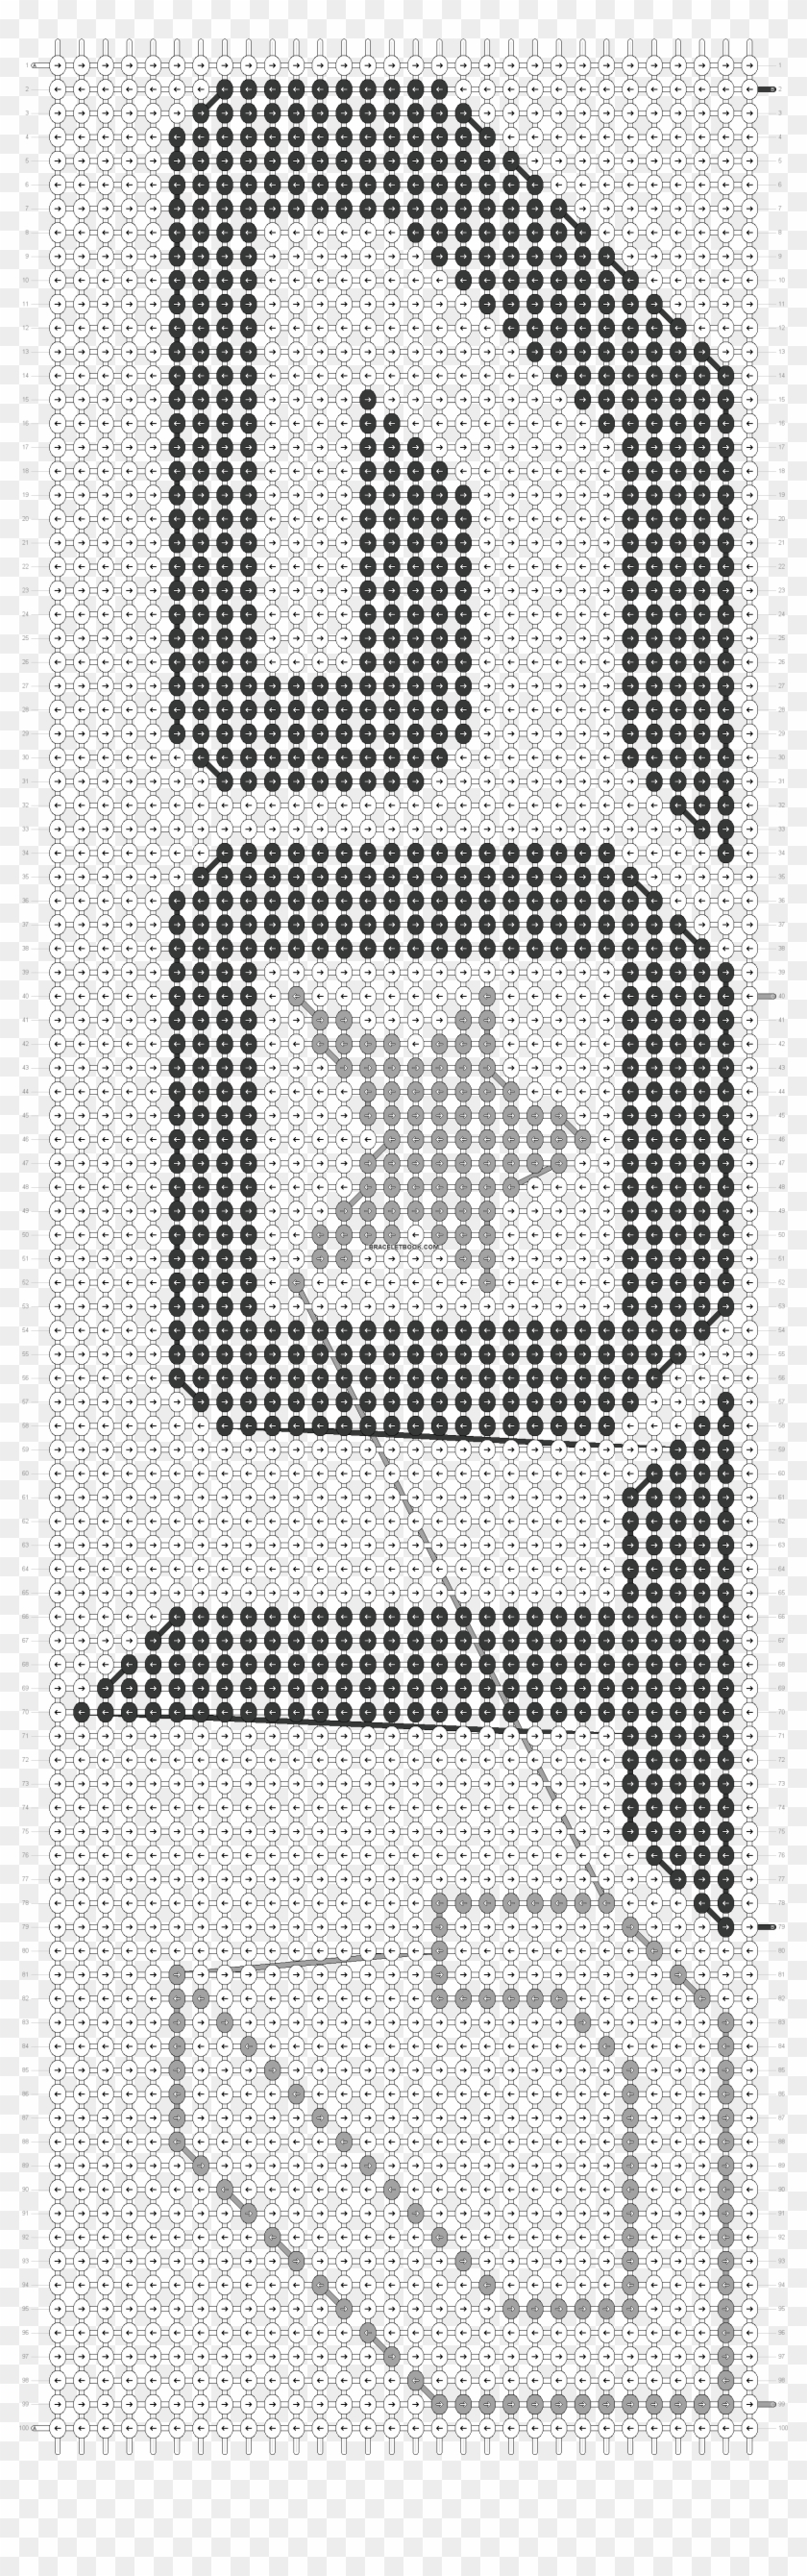 Alpha Pattern - Imagenes Pixeladas De Got7 Clipart